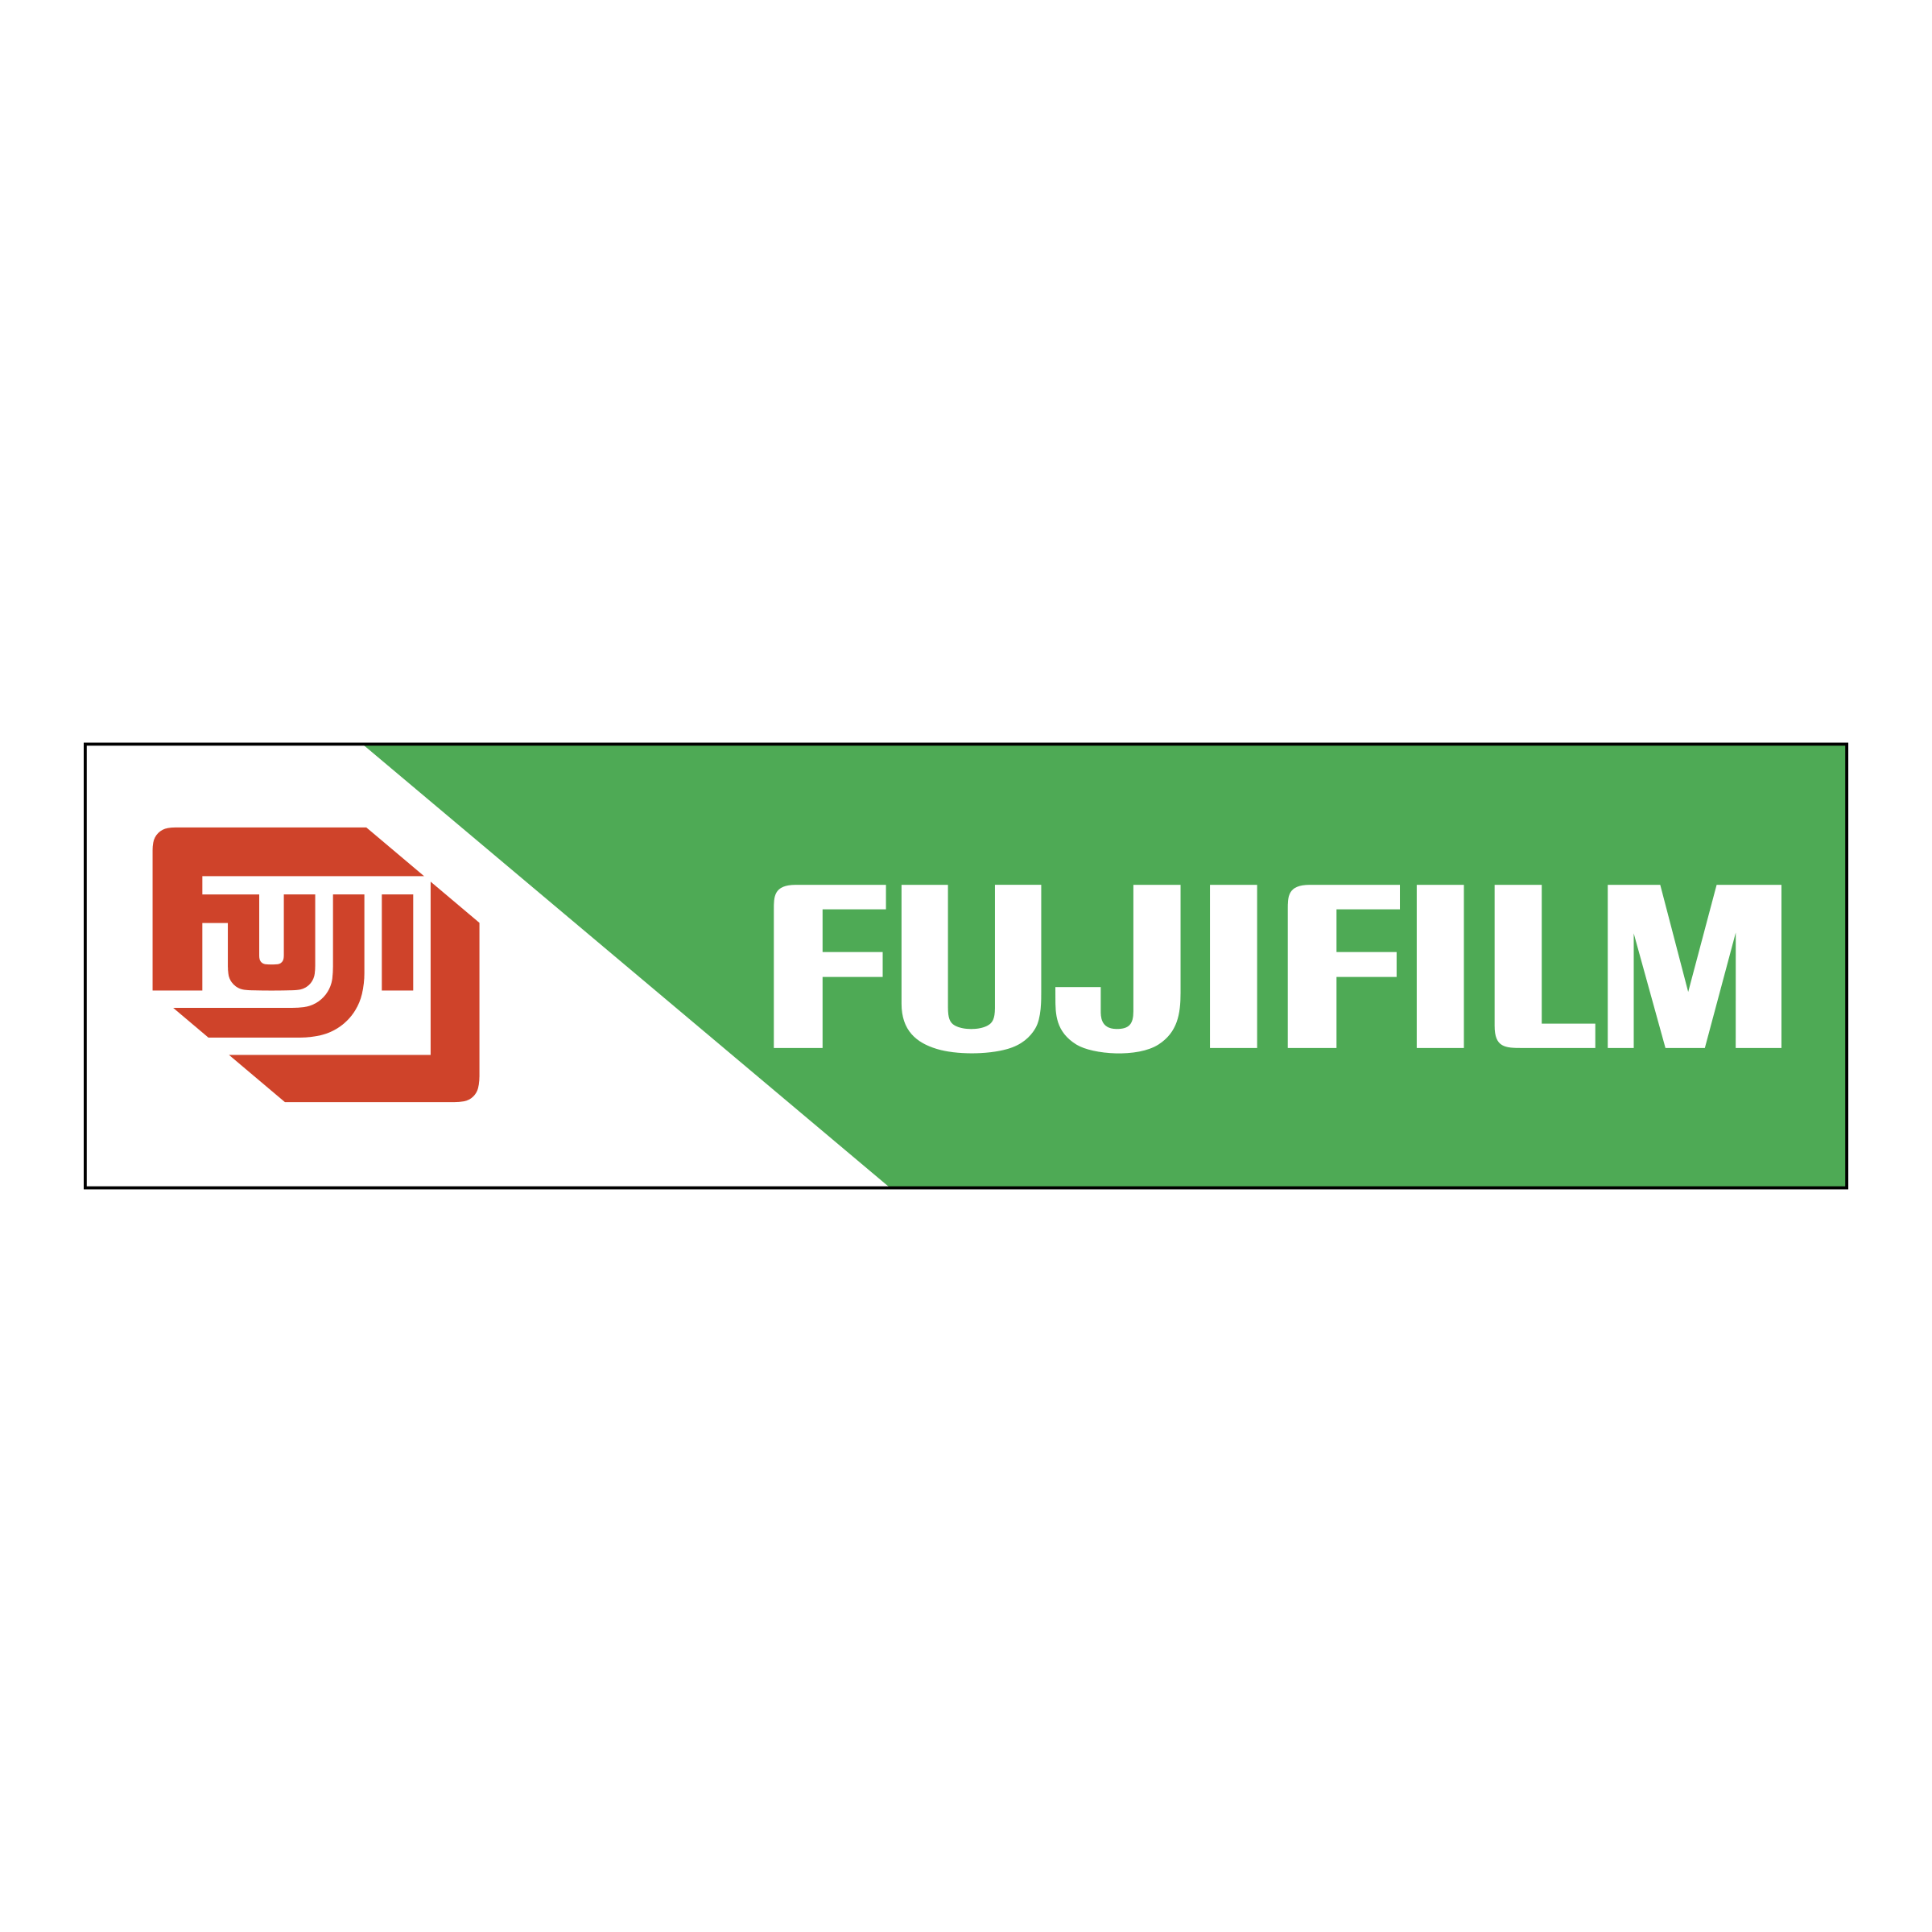 Fujifilm Logo - Fujifilm Logo PNG Transparent & SVG Vector